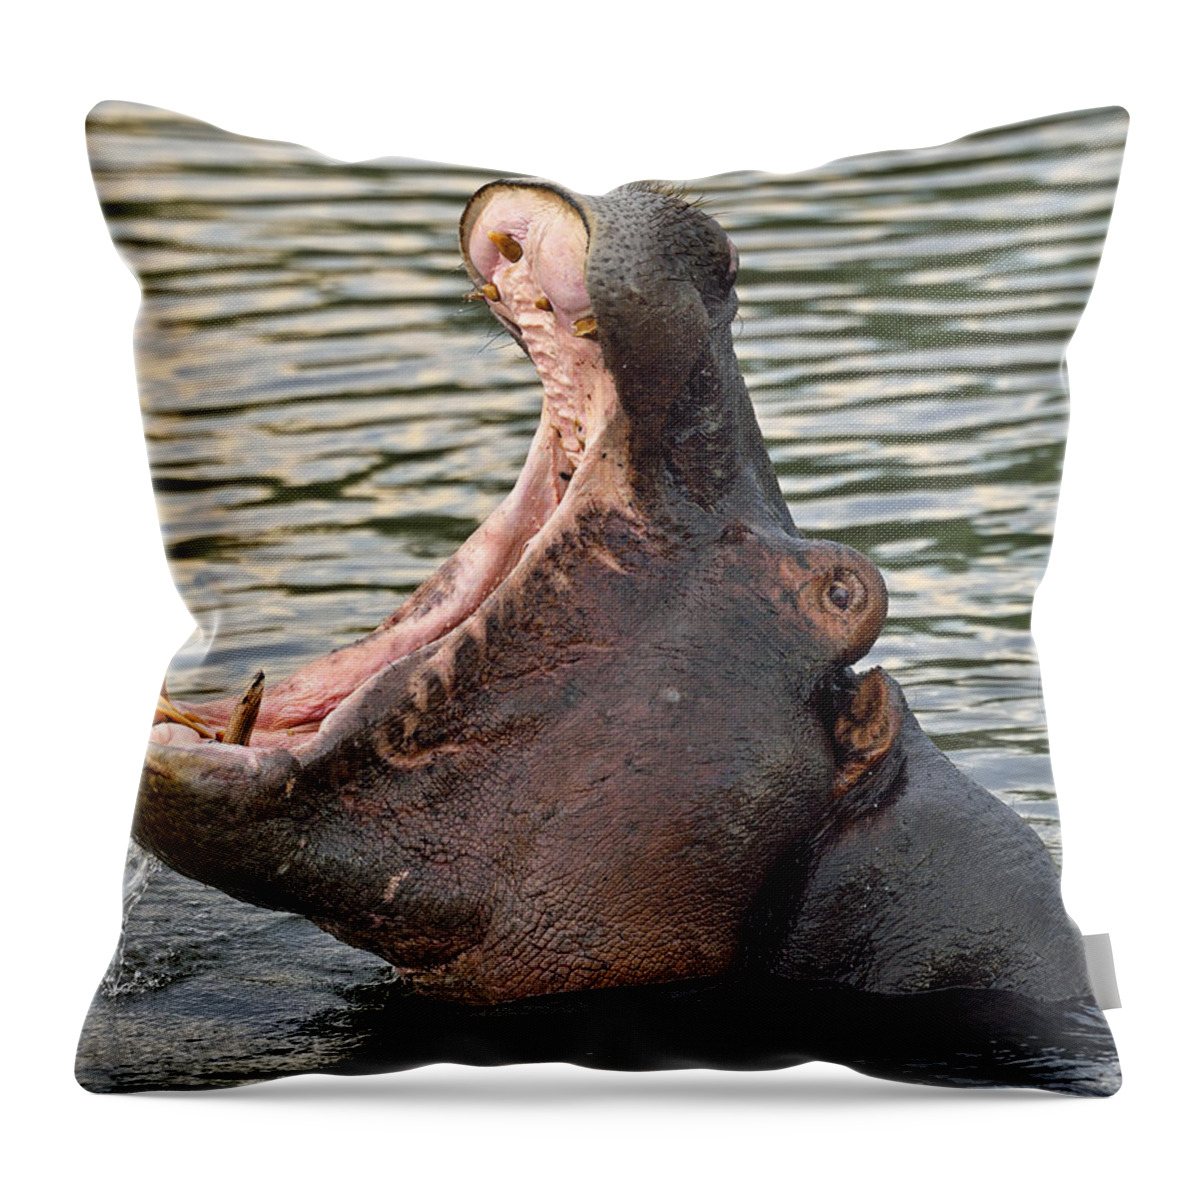 Hippopotamus Throw Pillow featuring the photograph Big Bite by Tony Beck